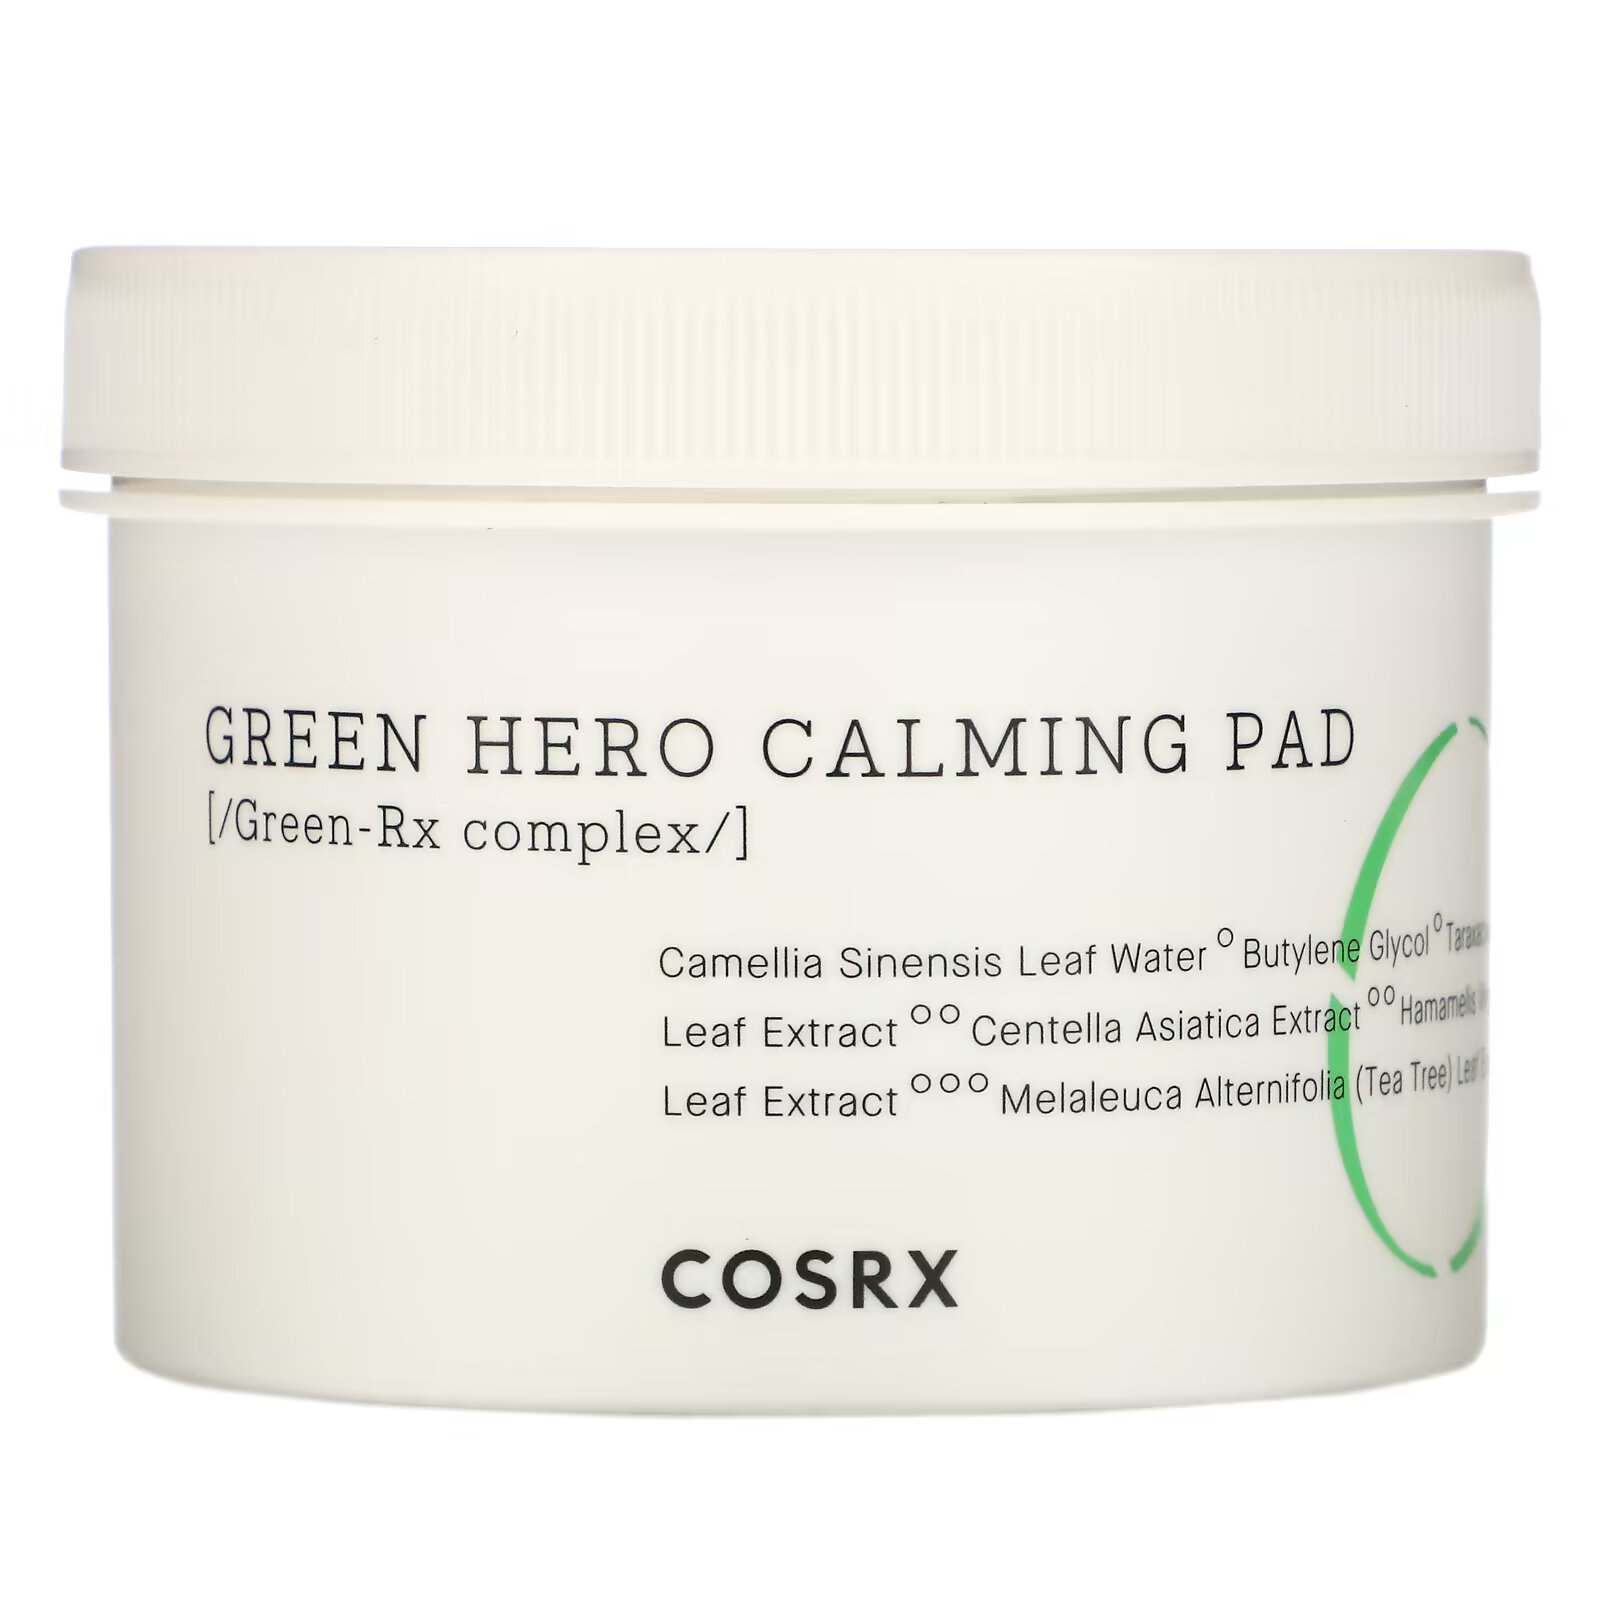 Cosrx, One Step Green Hero Calming Pad, успокаивающие диски, 70 шт., 135 мл (4,56 жидк. унции) увлажняющие подушечки one step 135 мл 70 шт cosrx